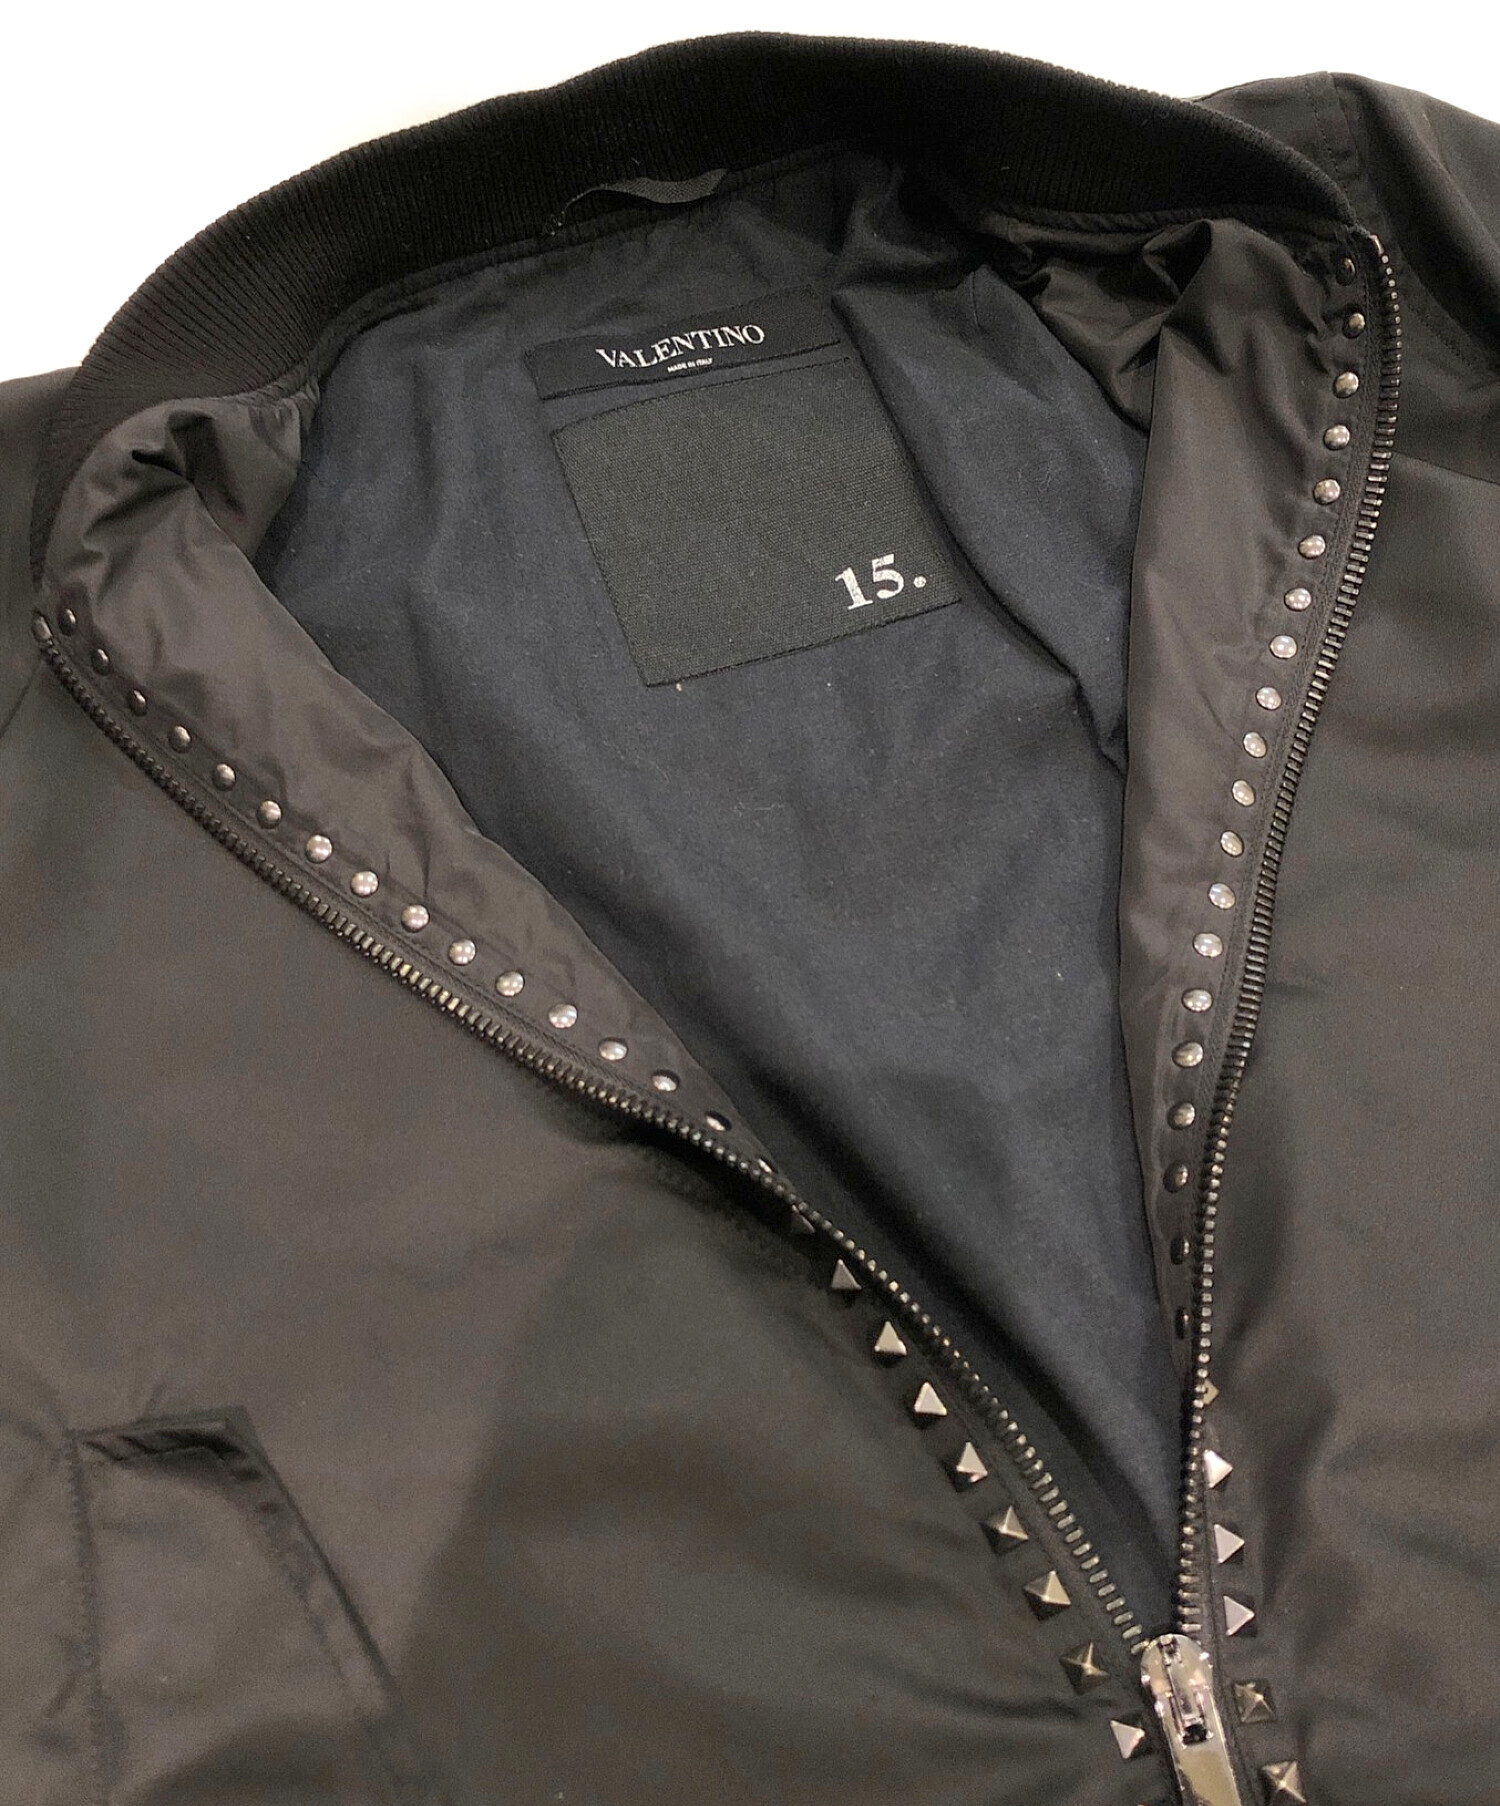 VALENTINO (ヴァレンティノ) ロックスタッズボンバージャケット ブラック サイズ:36